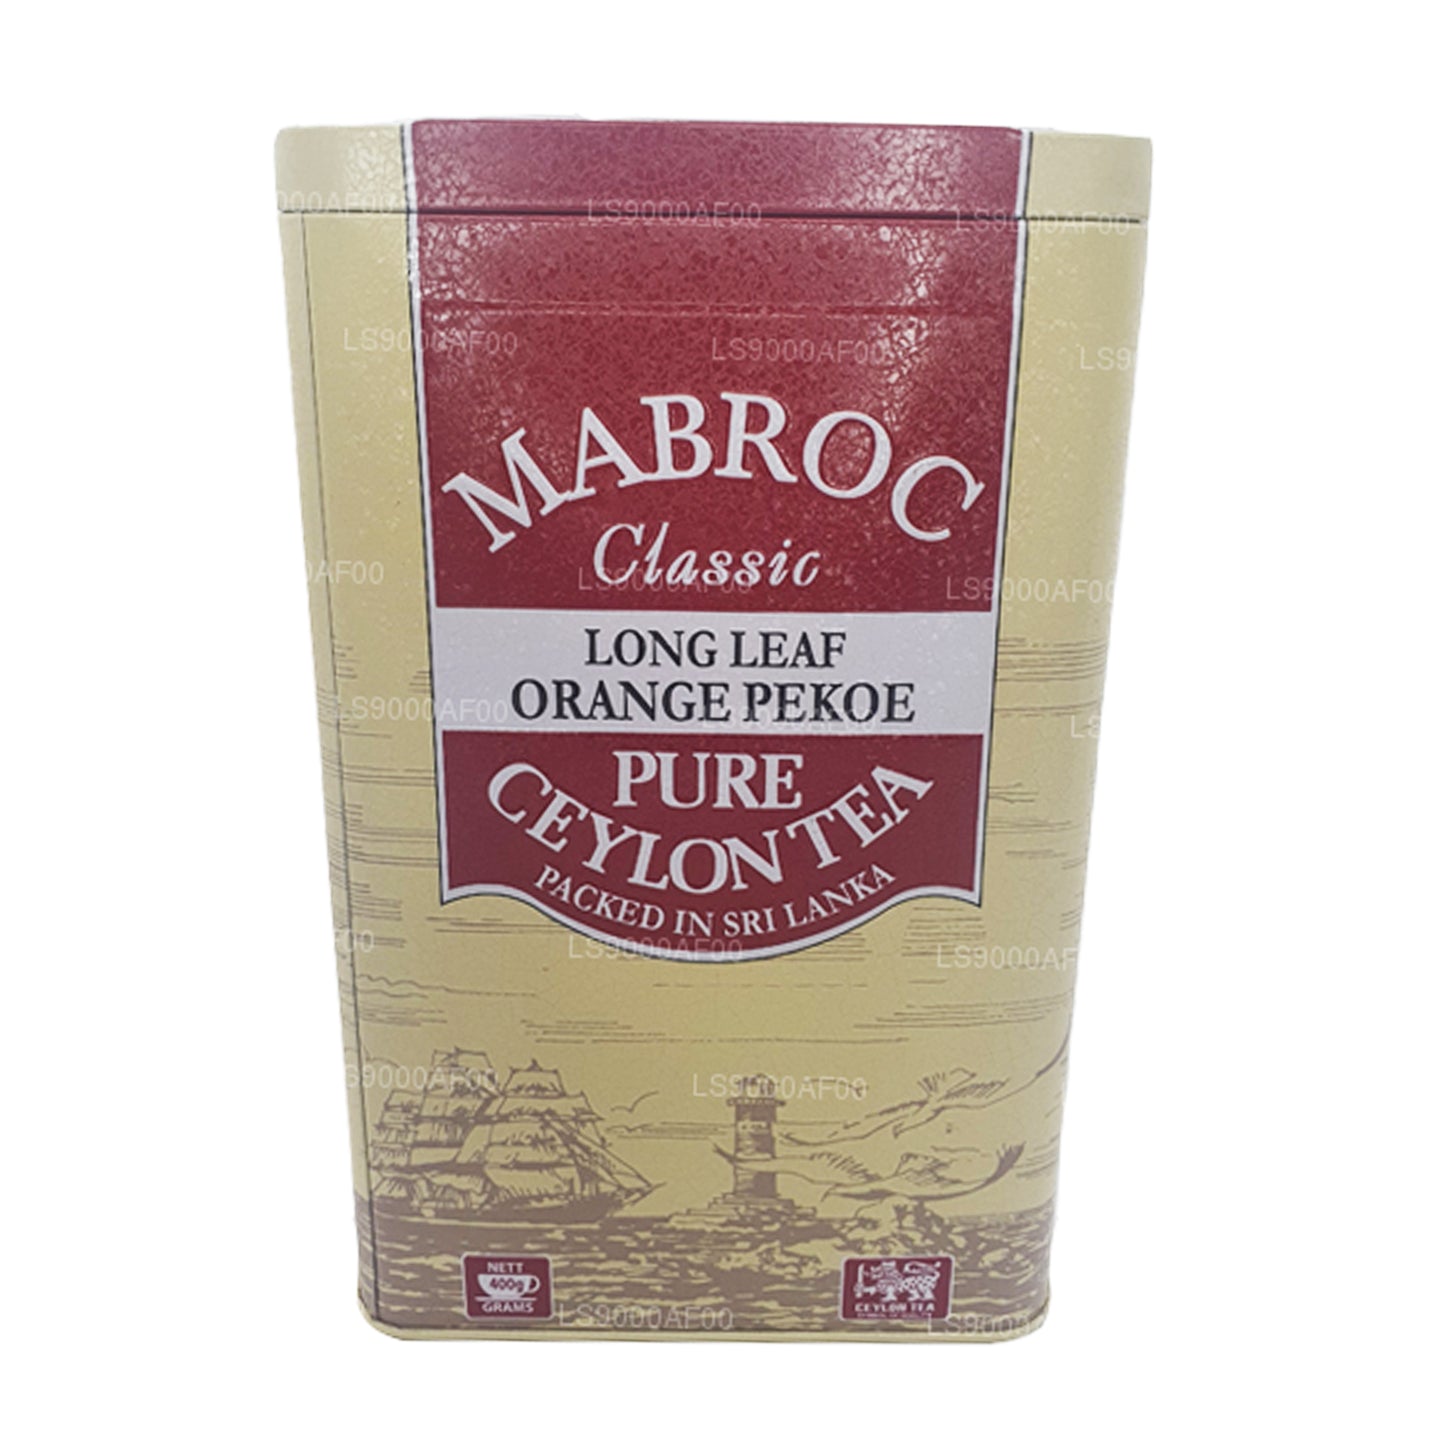 Té Mabroc Classic de hojas largas con hojas largas (400 g)